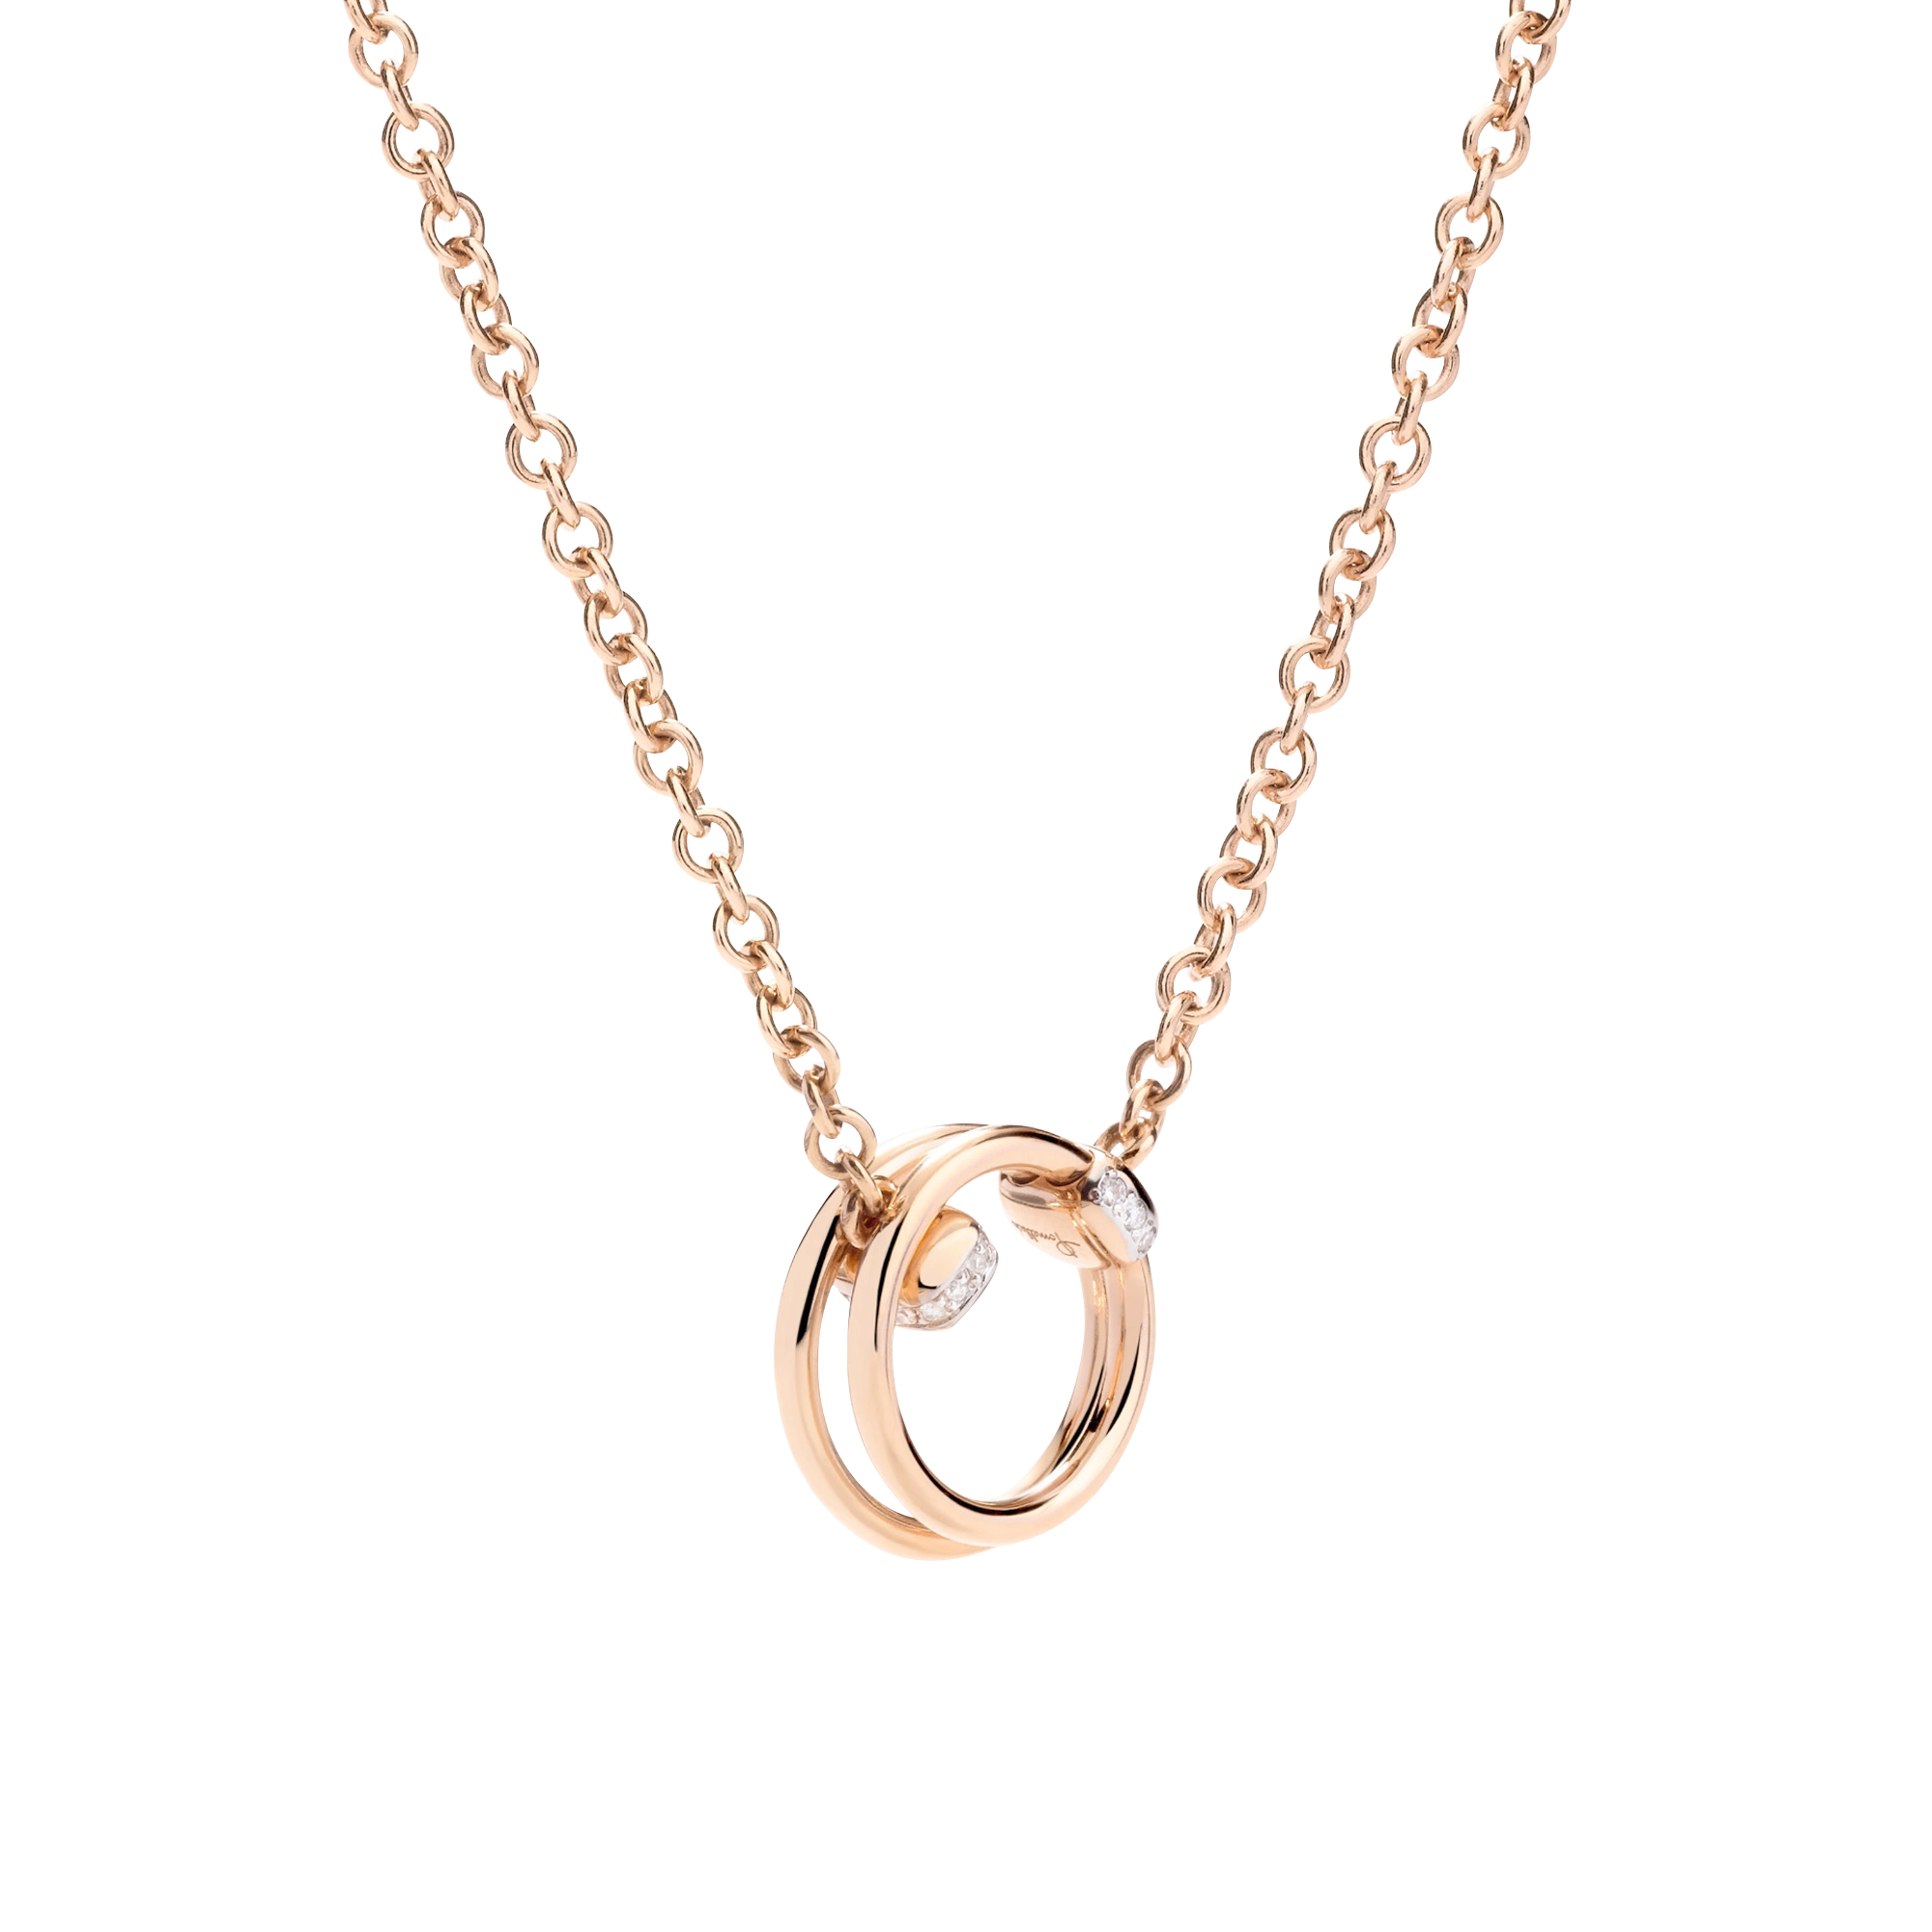 PCC4012 O7WHR DB000 020 Pomellato pomellato together necklace with pendant rose gold 18kt diamond t65c362d6931ae16d